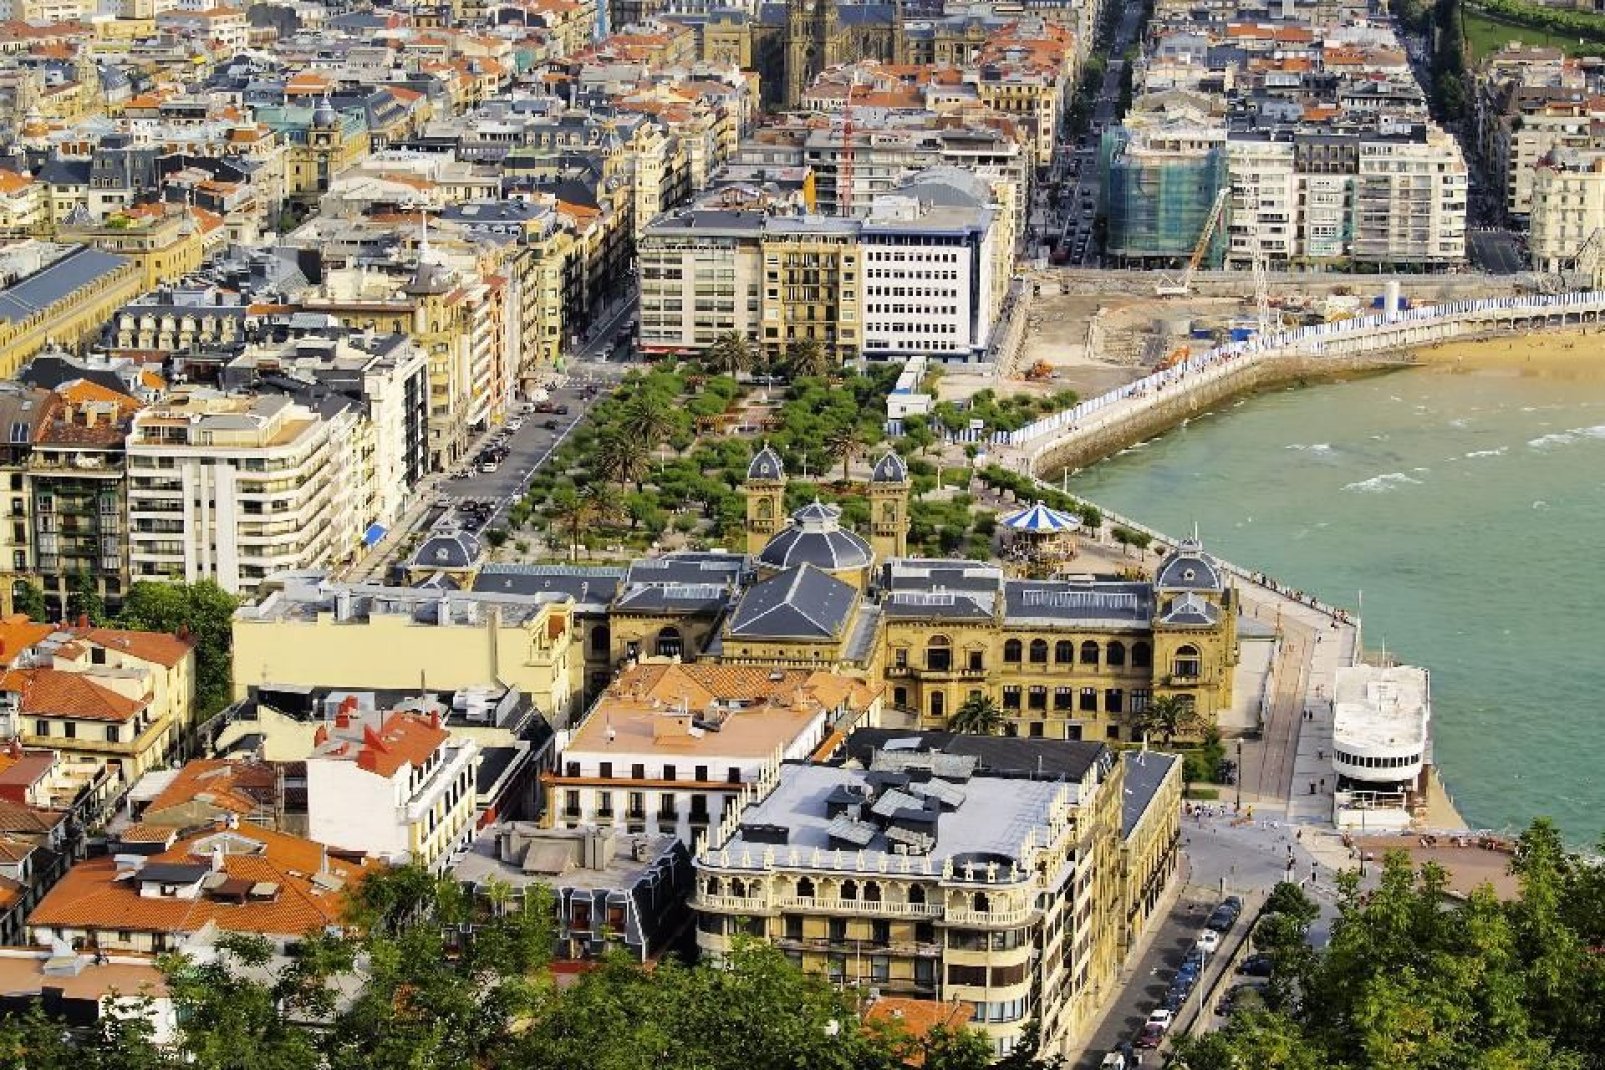 Donostia in basco significa San Sebastián.